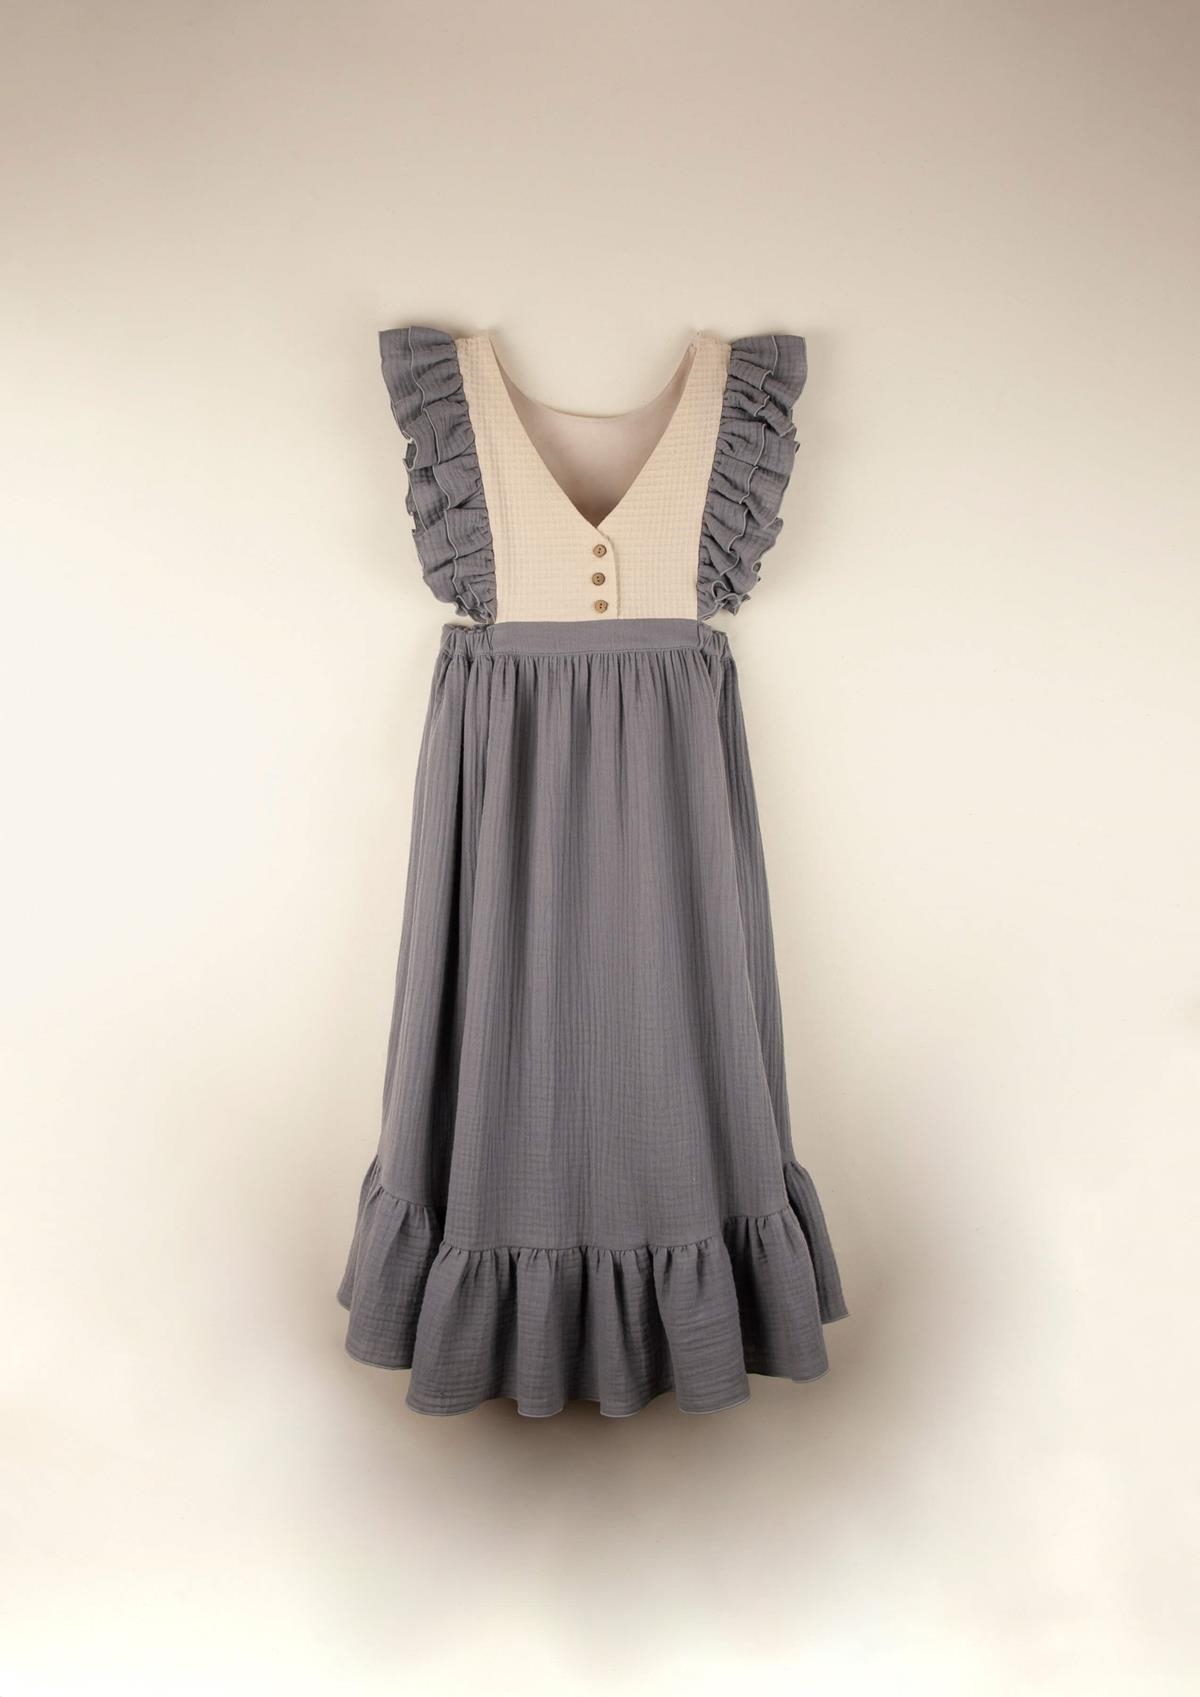 Mod.34.3 Greyish-blue organic bibbed dress with embroidery | SS22 Mod.34.3 Greyish-blue organic bibbed dress with embroidery | 1